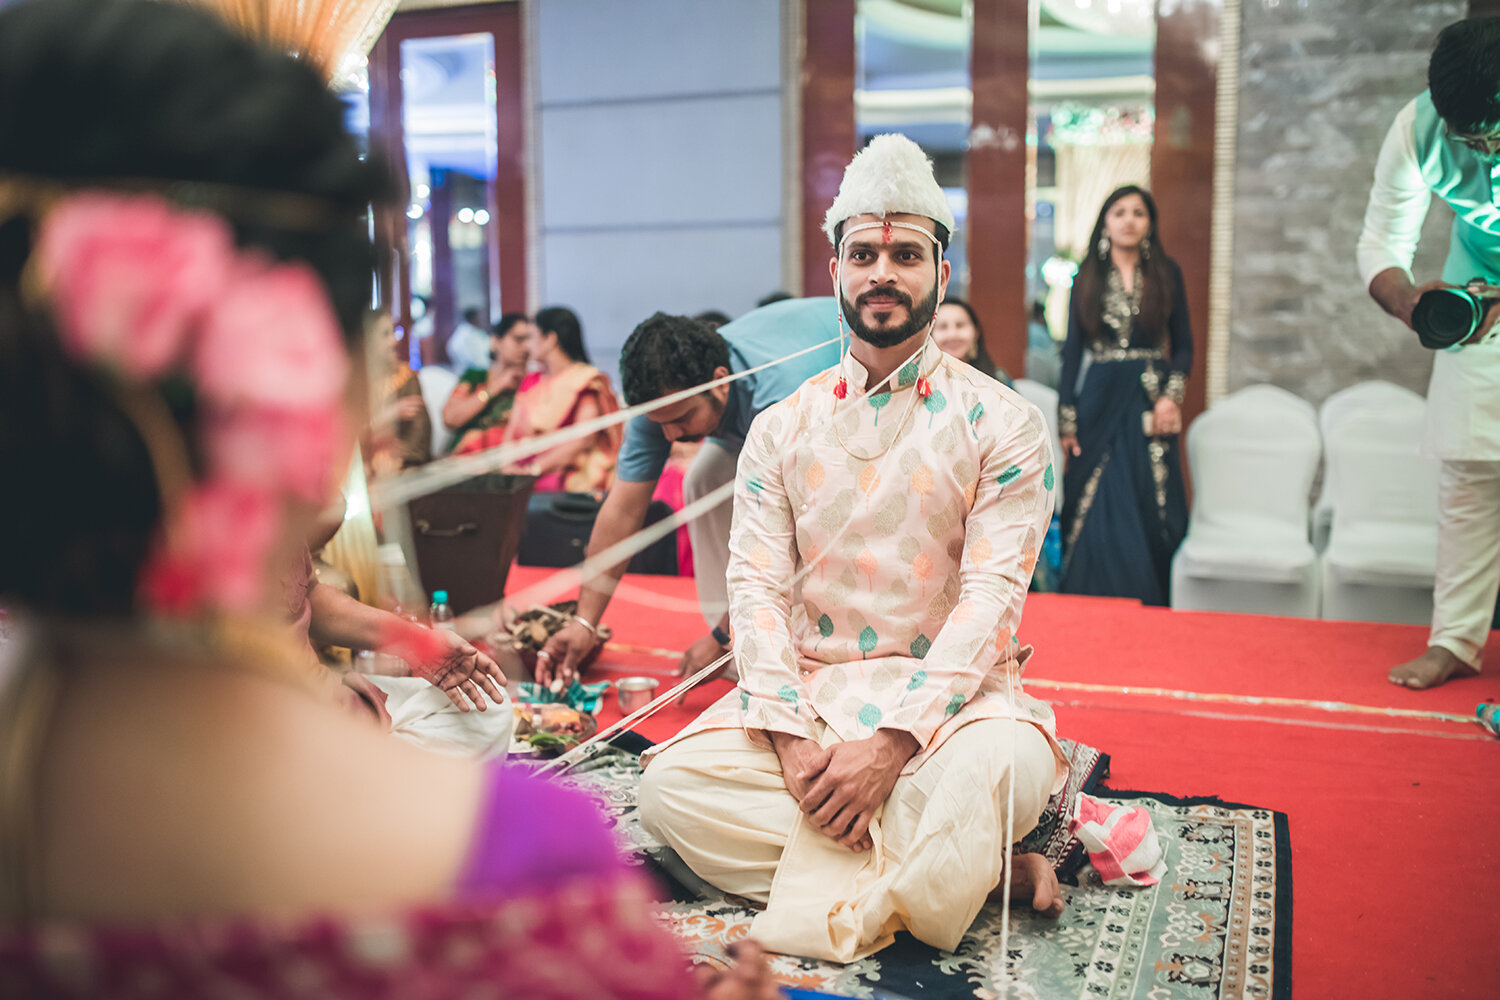 Royal Marathi Grooms That Aced The Peshwai Wedding Look